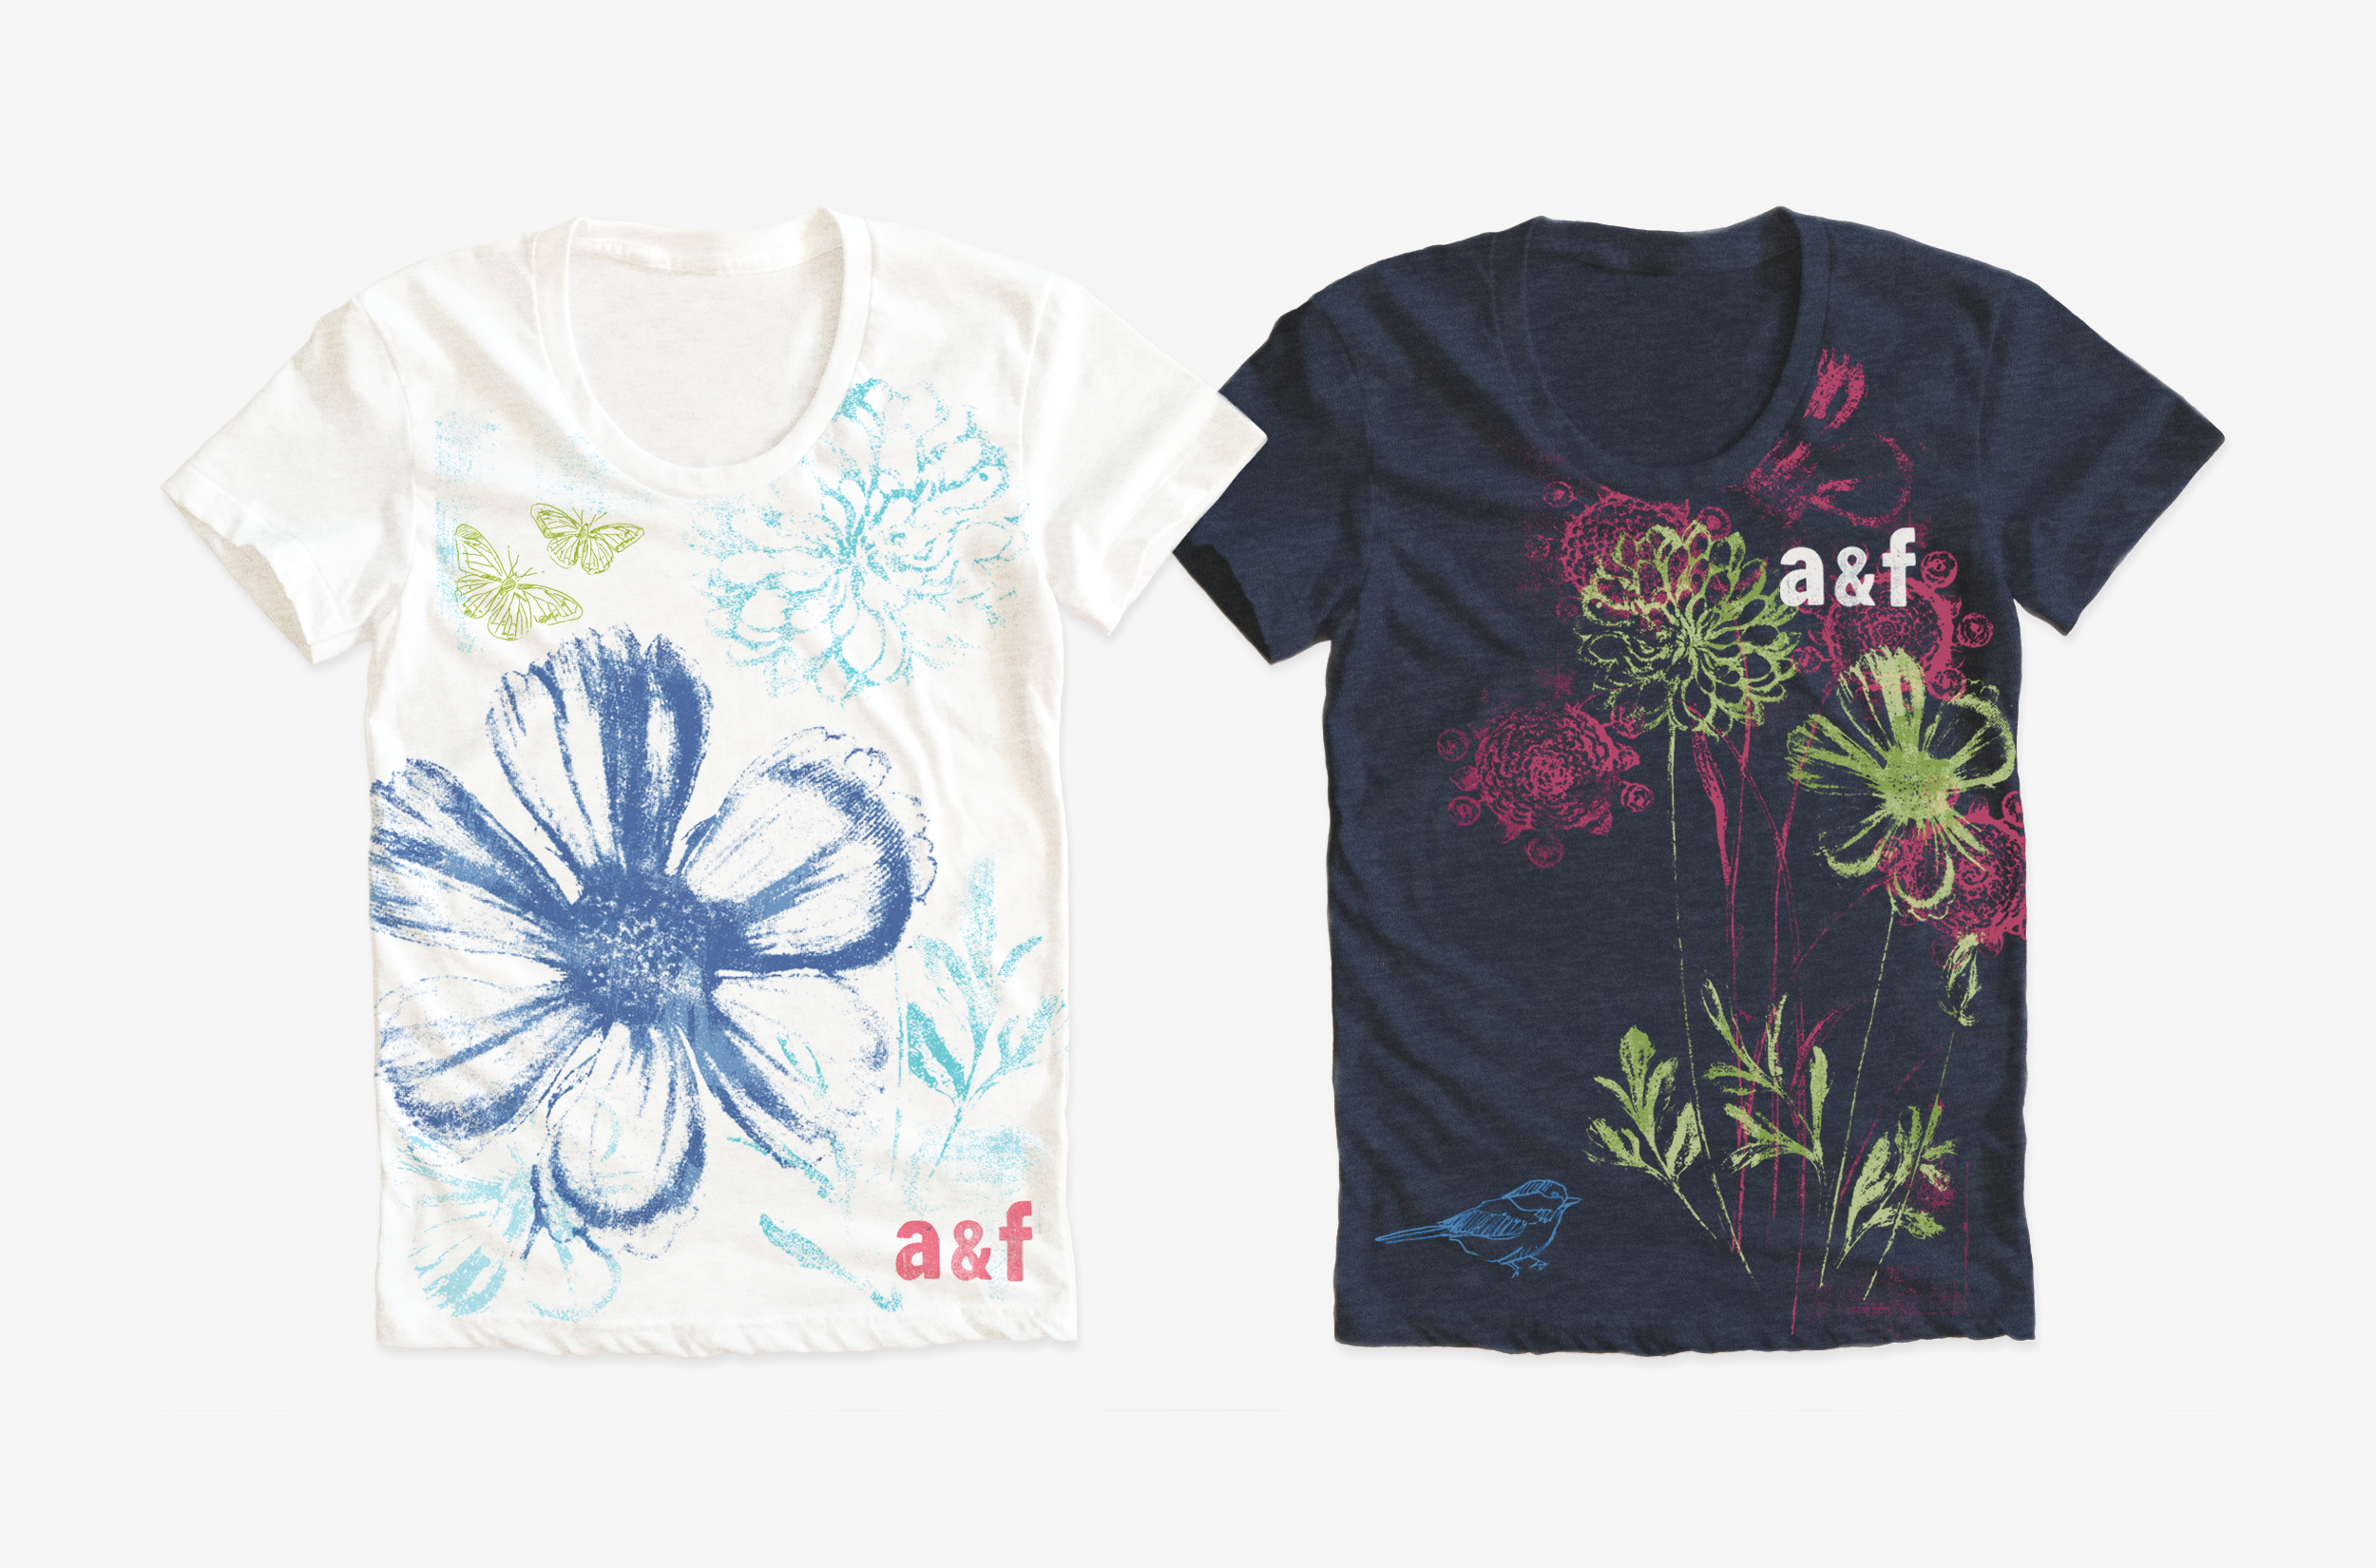  ABERCROMBIE KIDS / Girls t-shirt graphics 